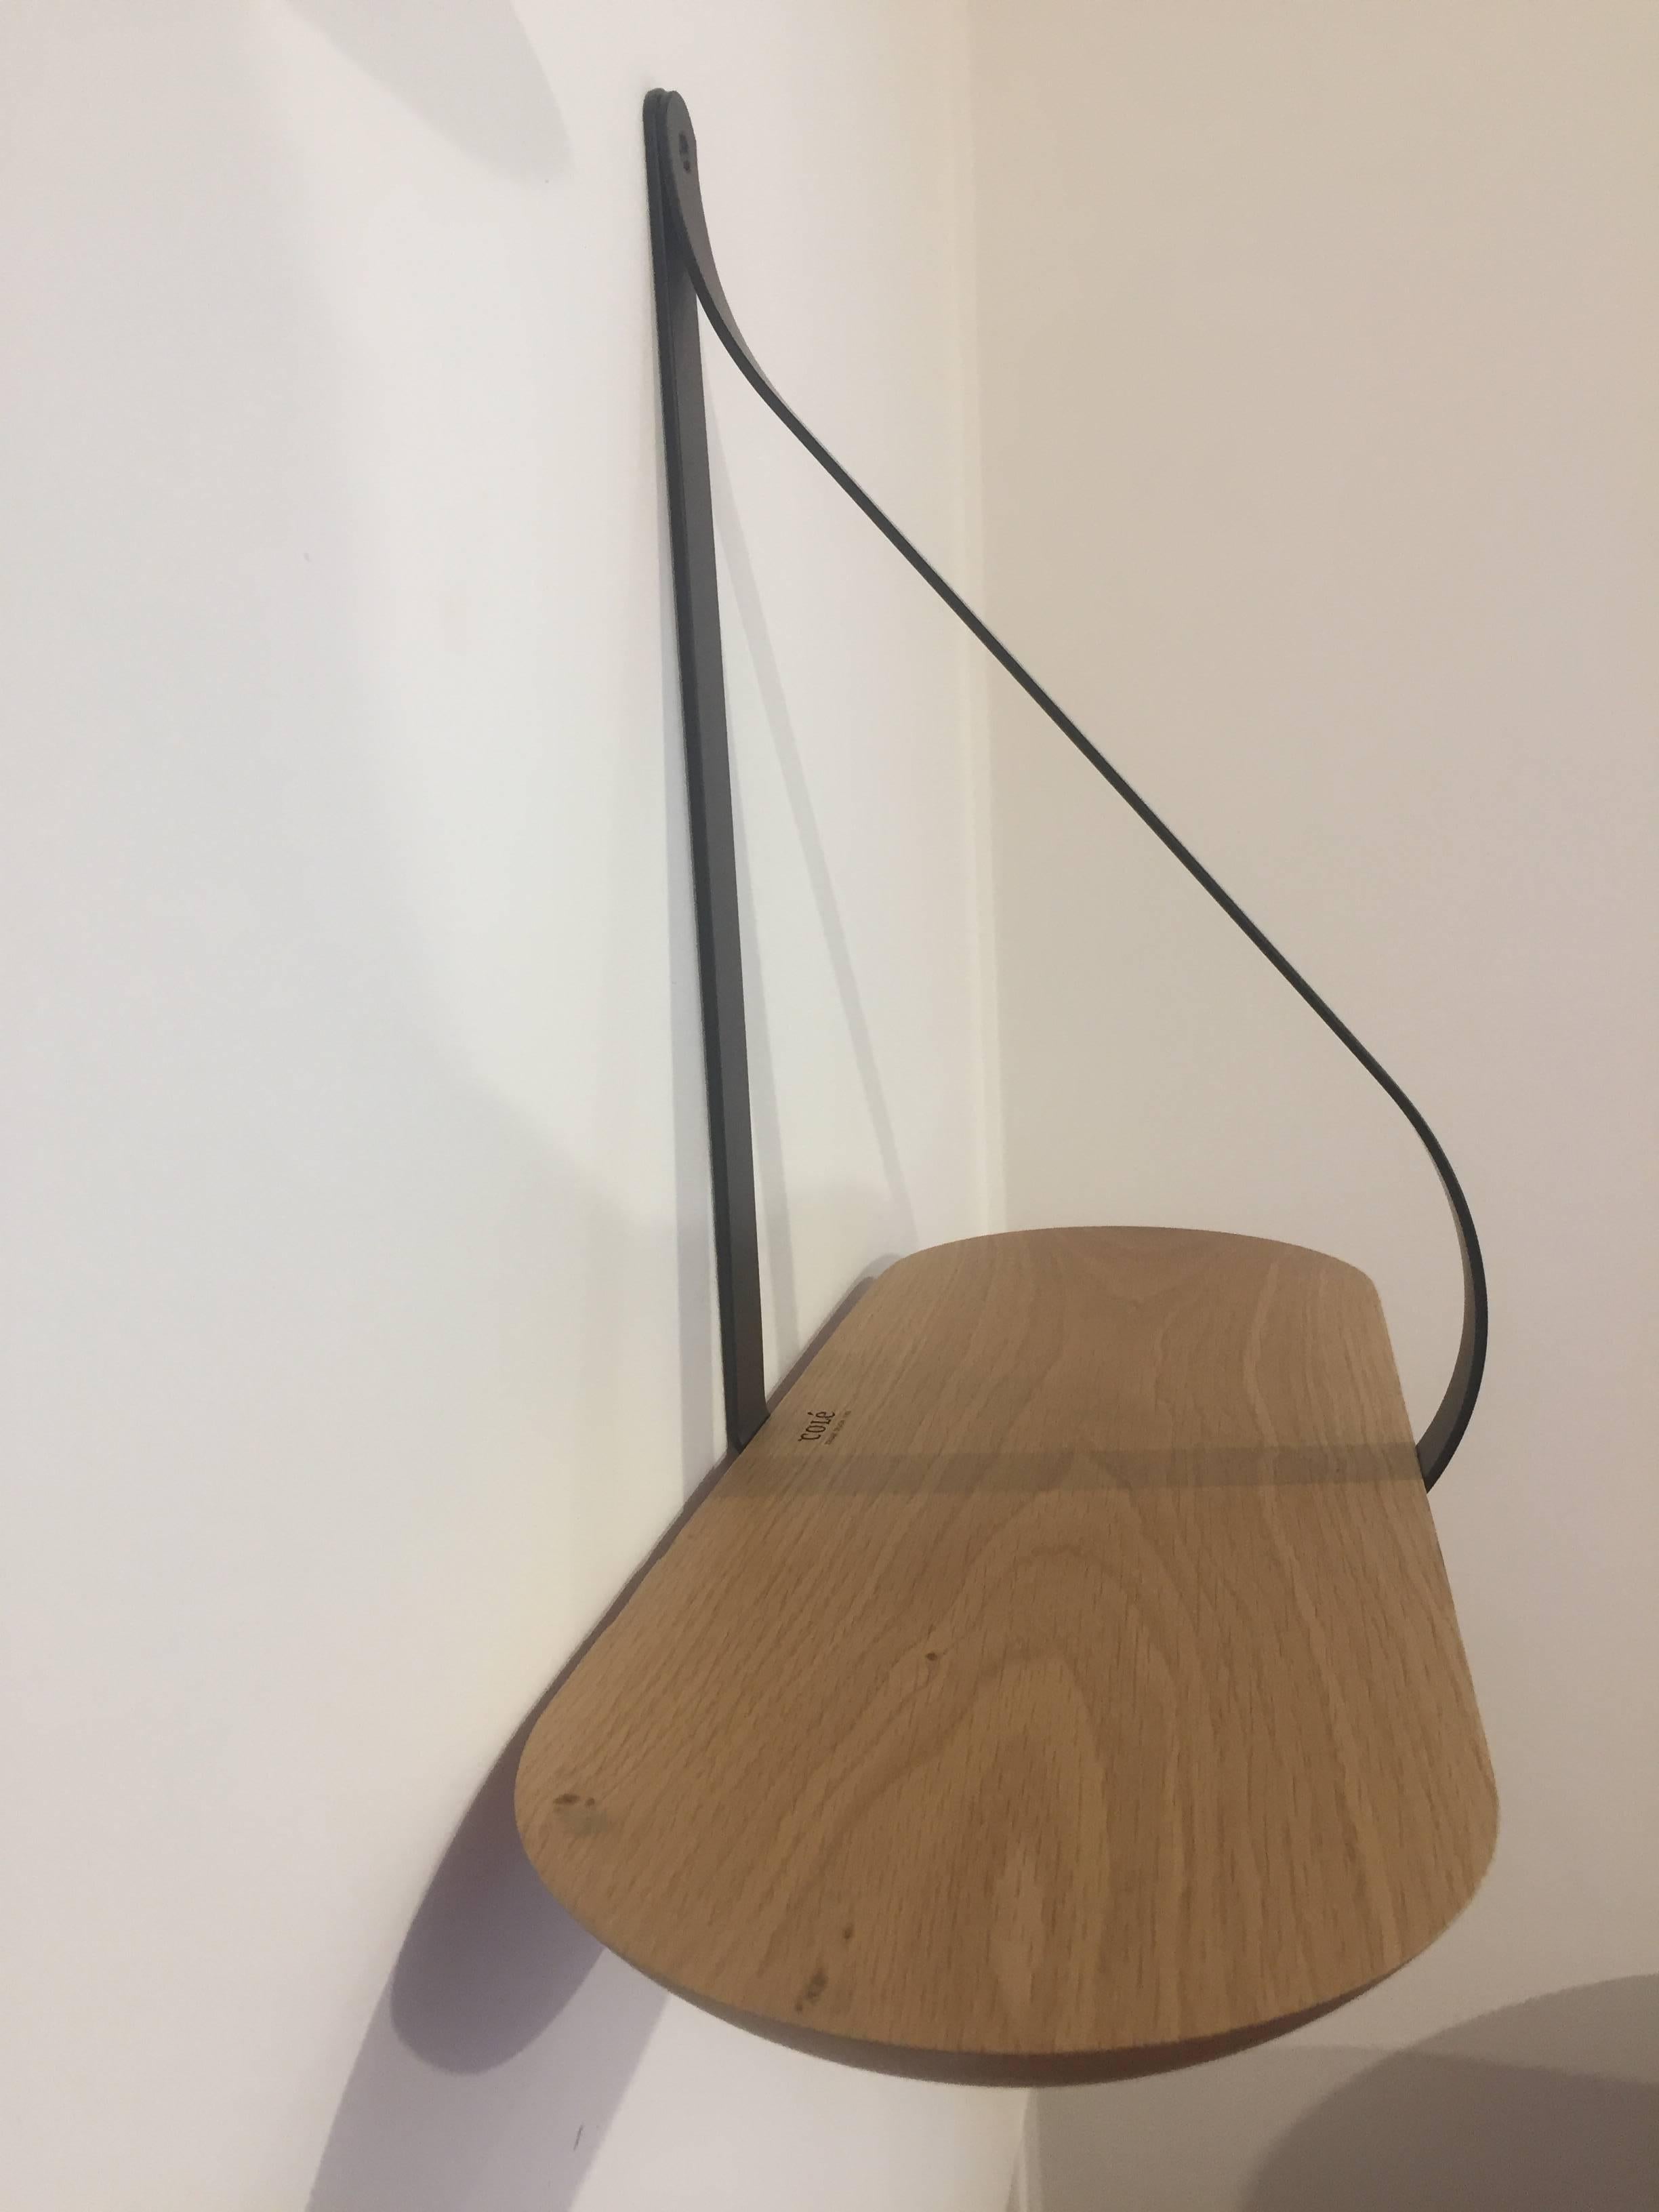 Contemporary Libra Shelf, Minimalist Wall Shelf in Solid Oak and Black Metal Stirrup